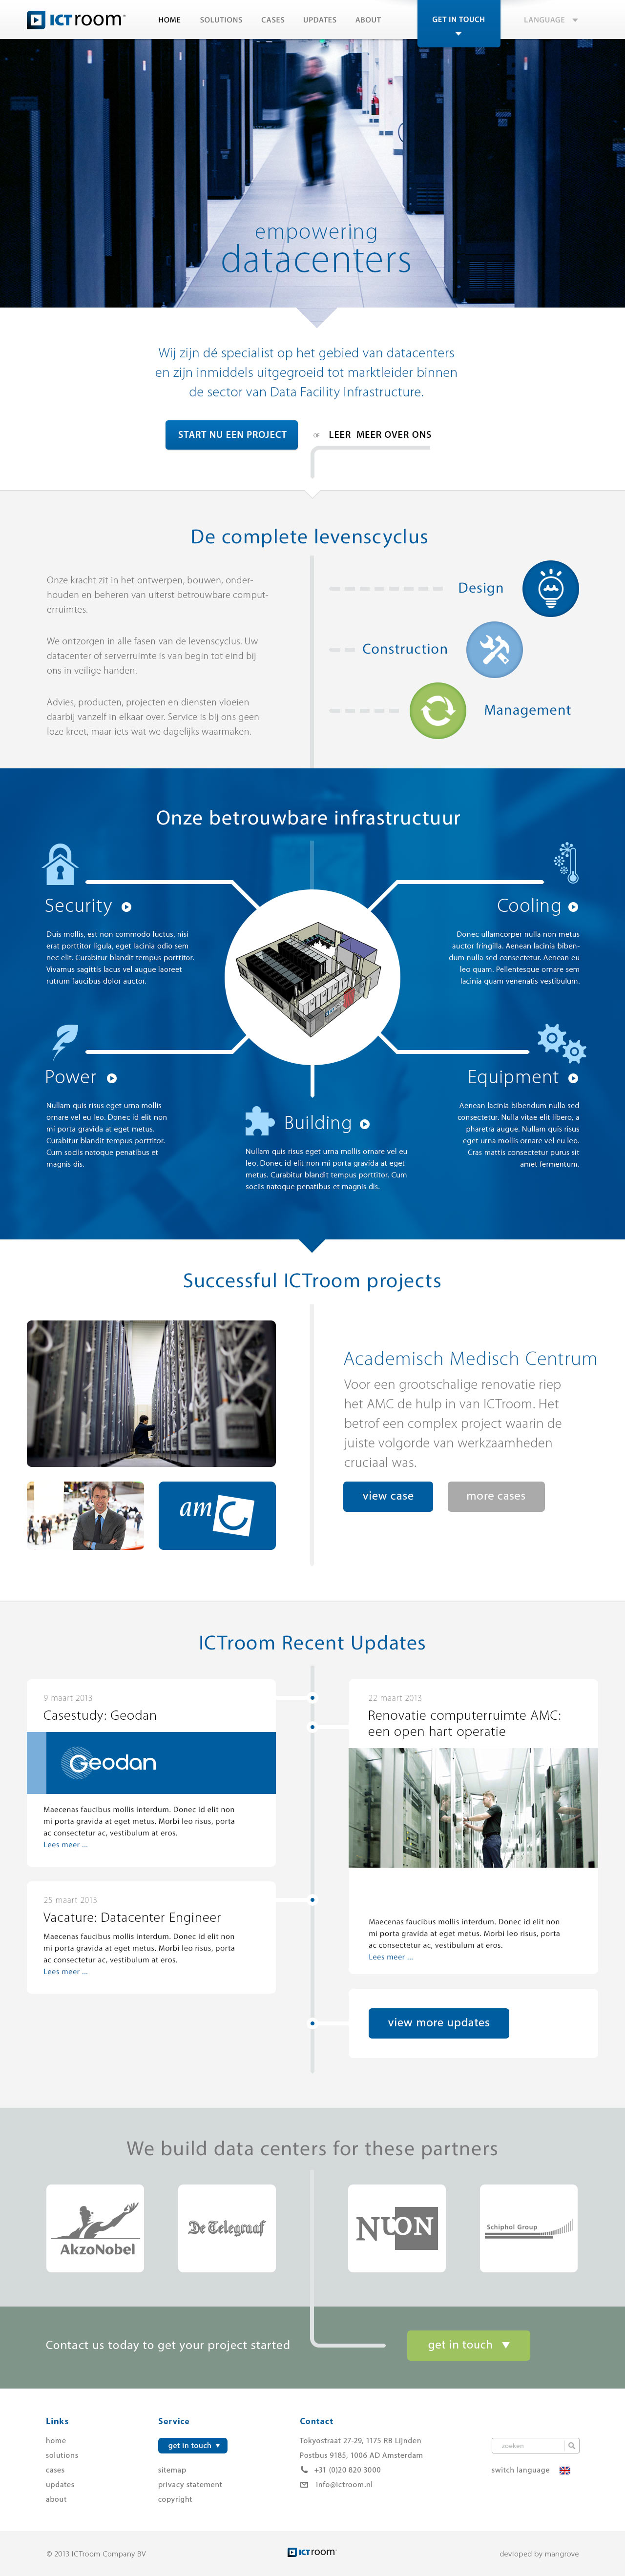 ICT Room Homepage